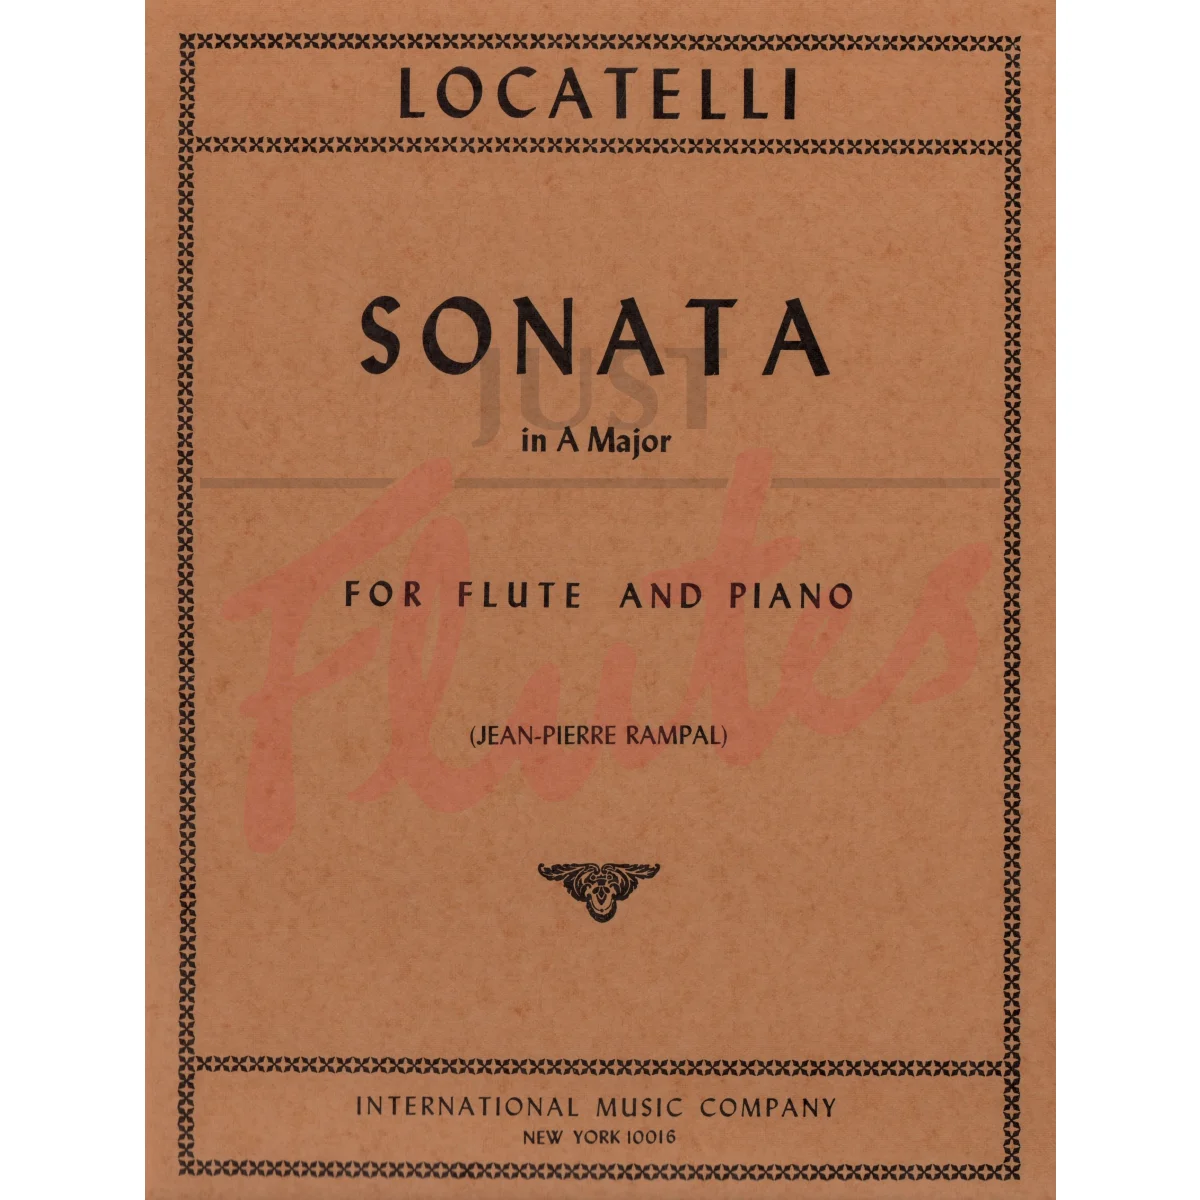 Sonata No. 6 in A major for Flute and Piano